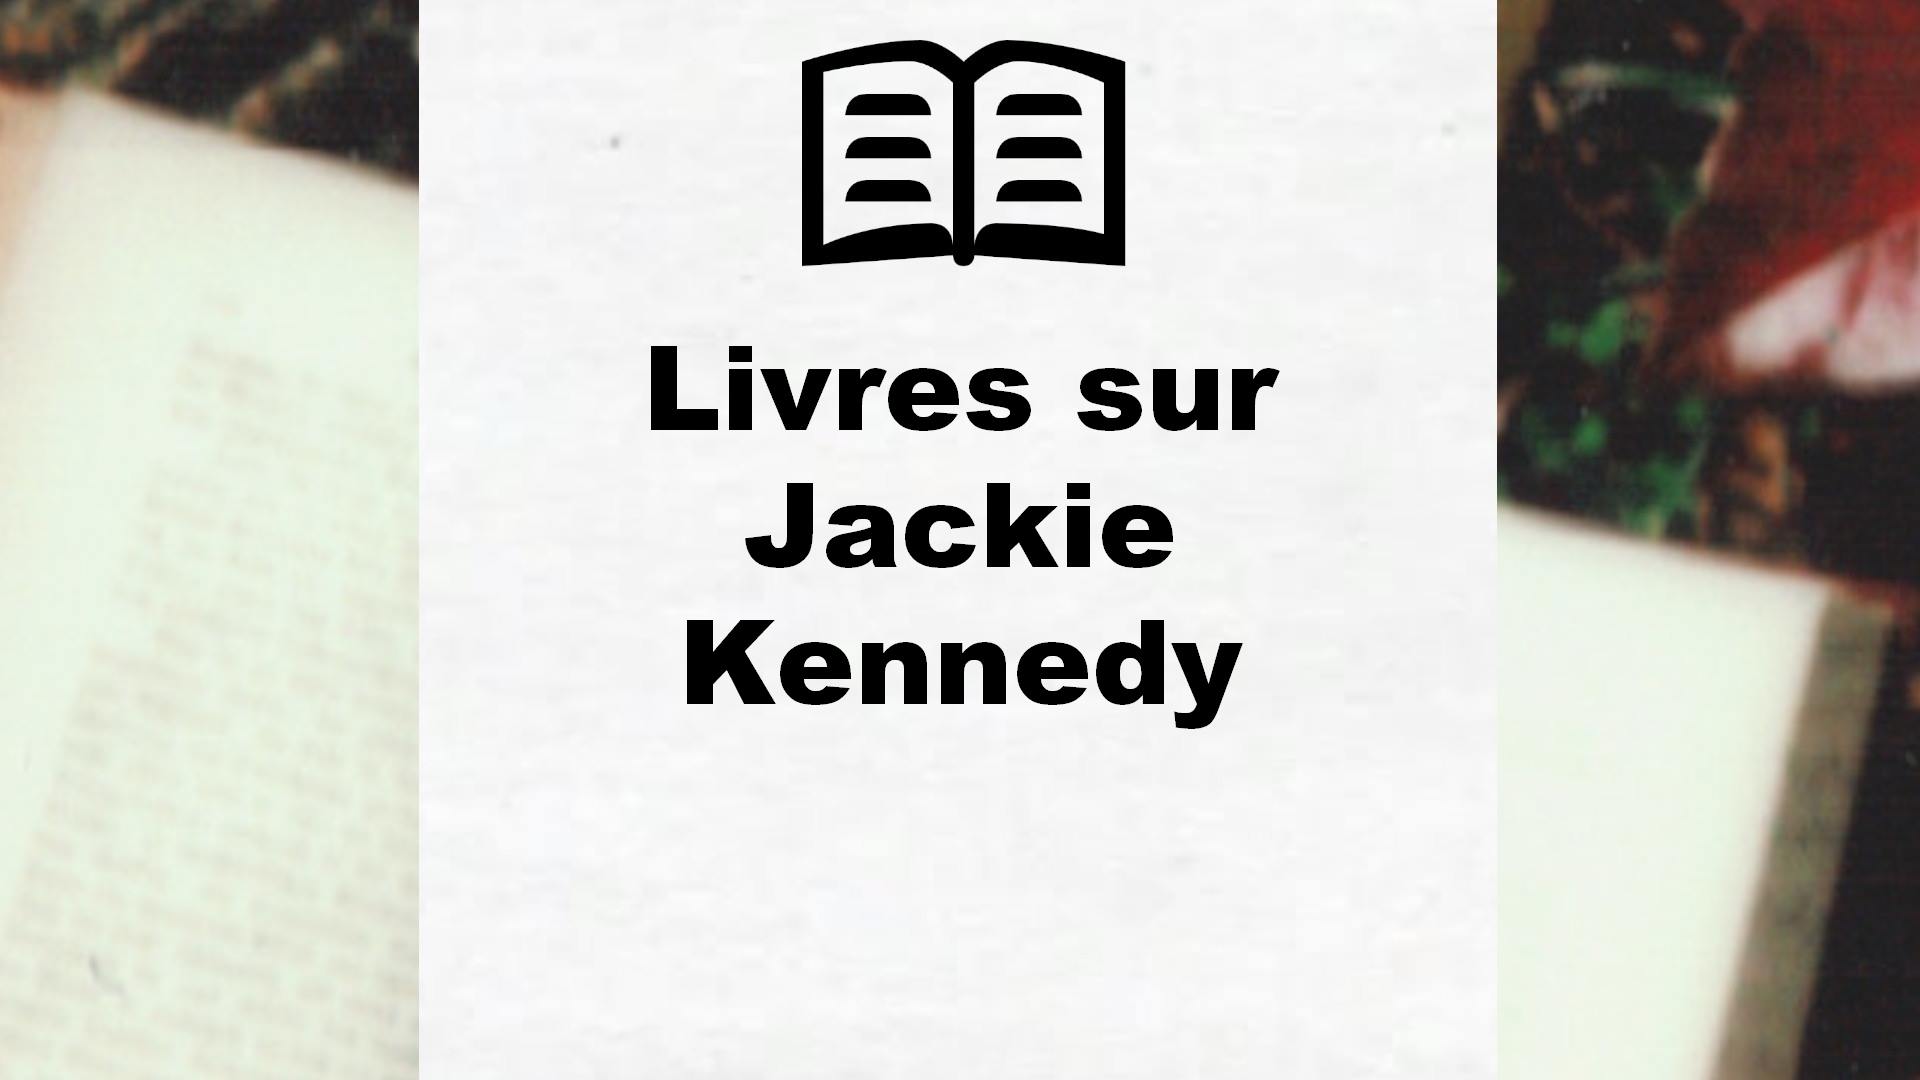 Livres sur Jackie Kennedy